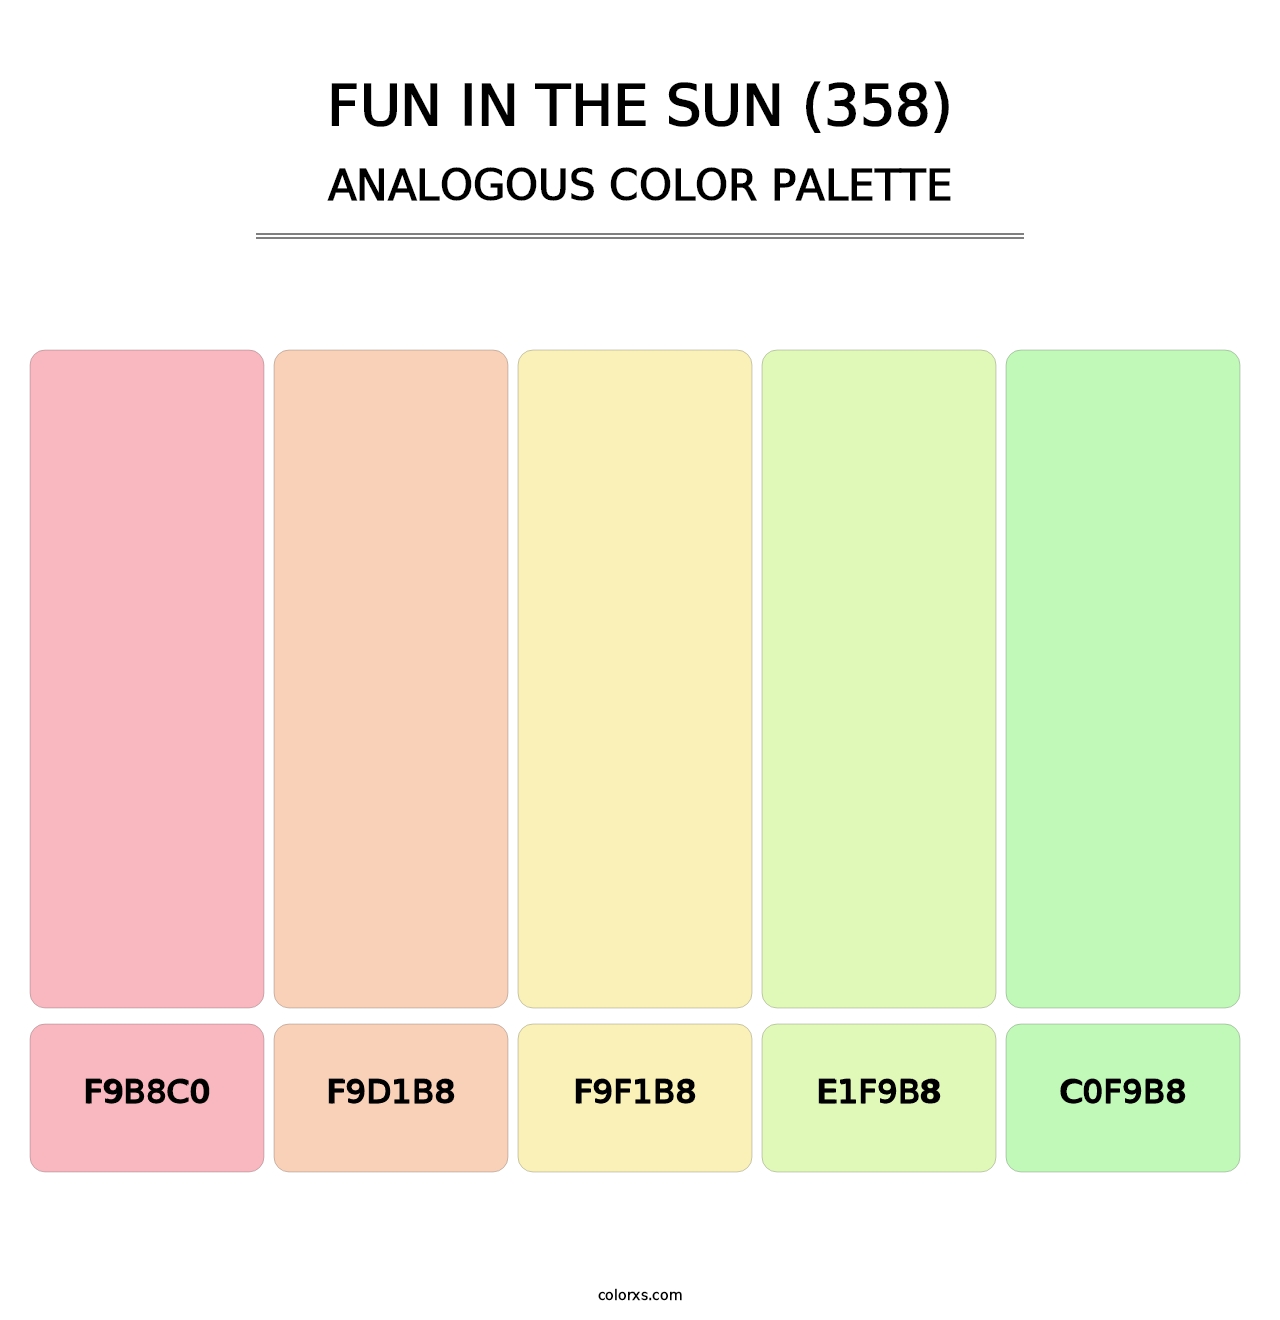 Fun in the Sun (358) - Analogous Color Palette